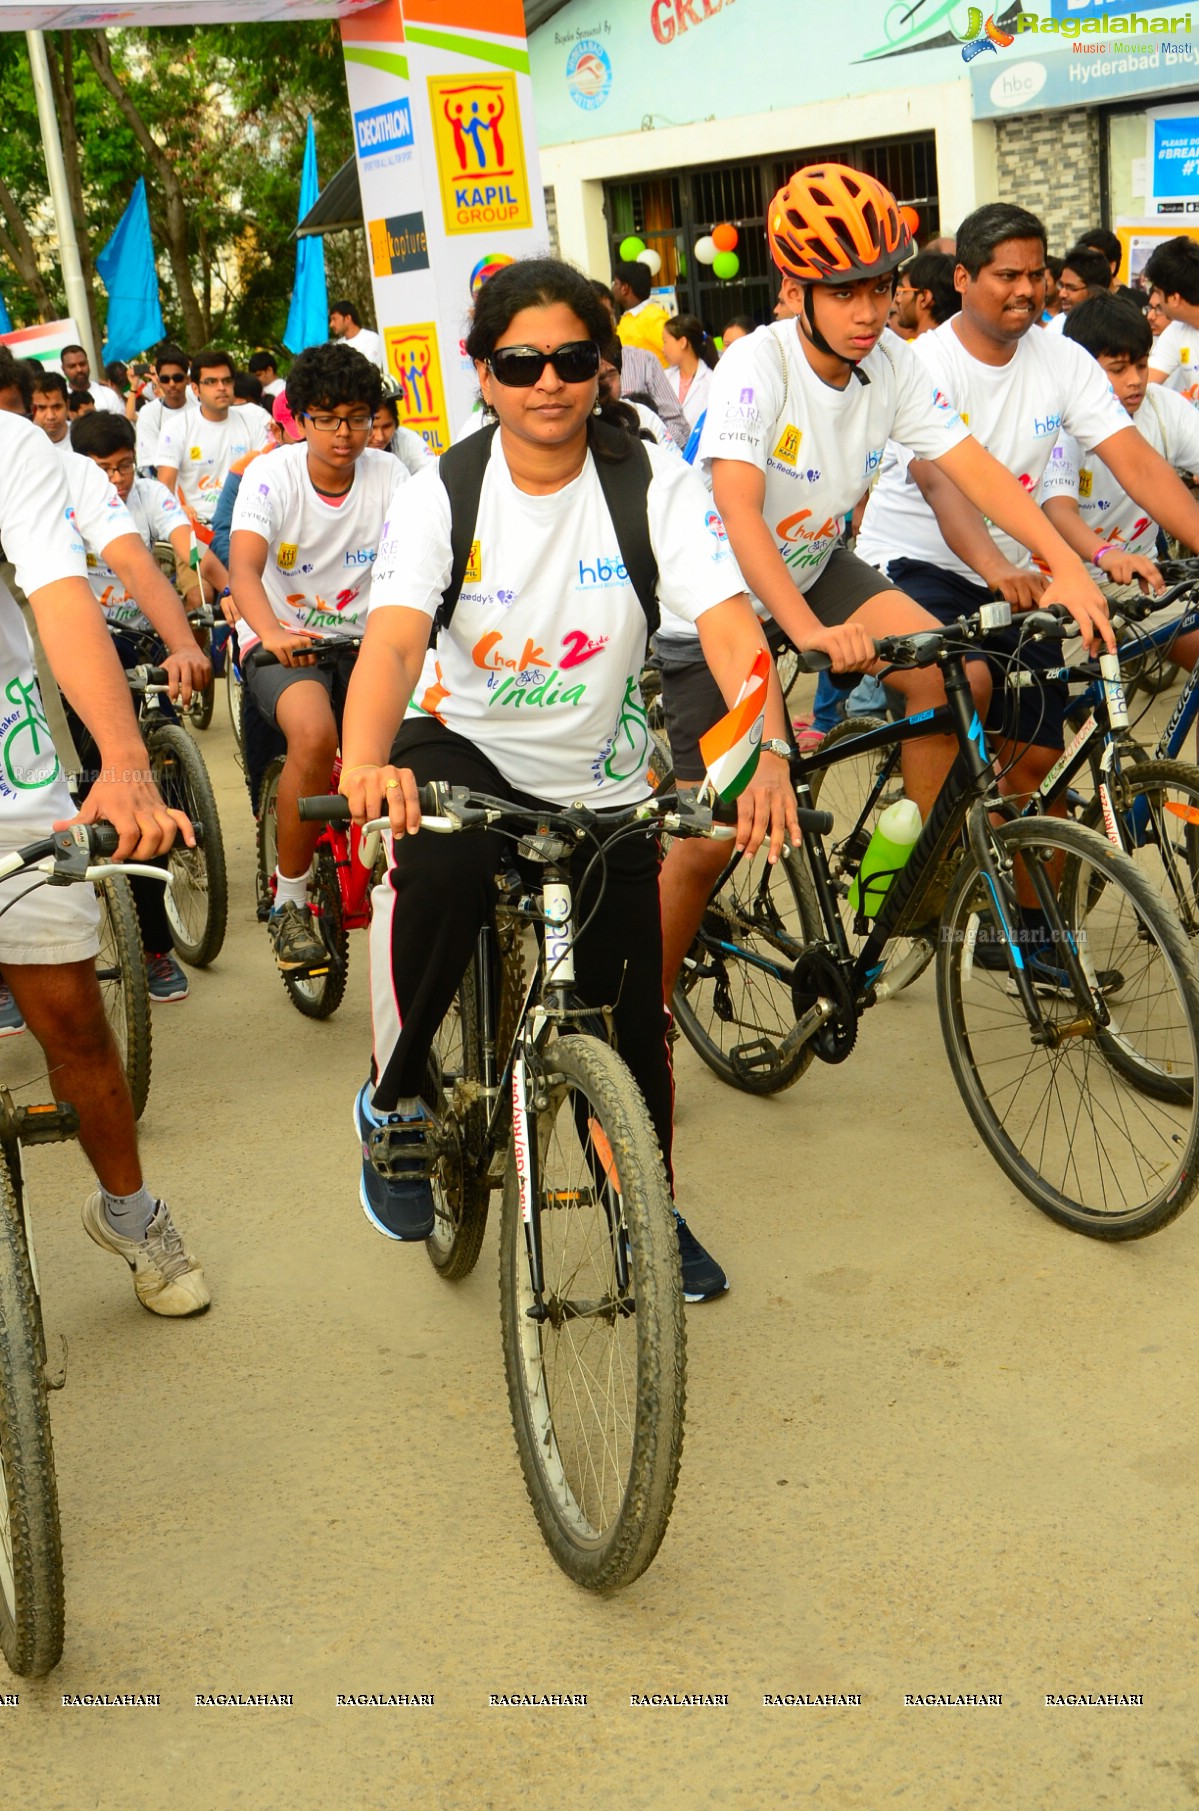 Hyderabad Bicycling Club's 'Chak De India Ride 2' Flags Off at Gachibowli Bike Station